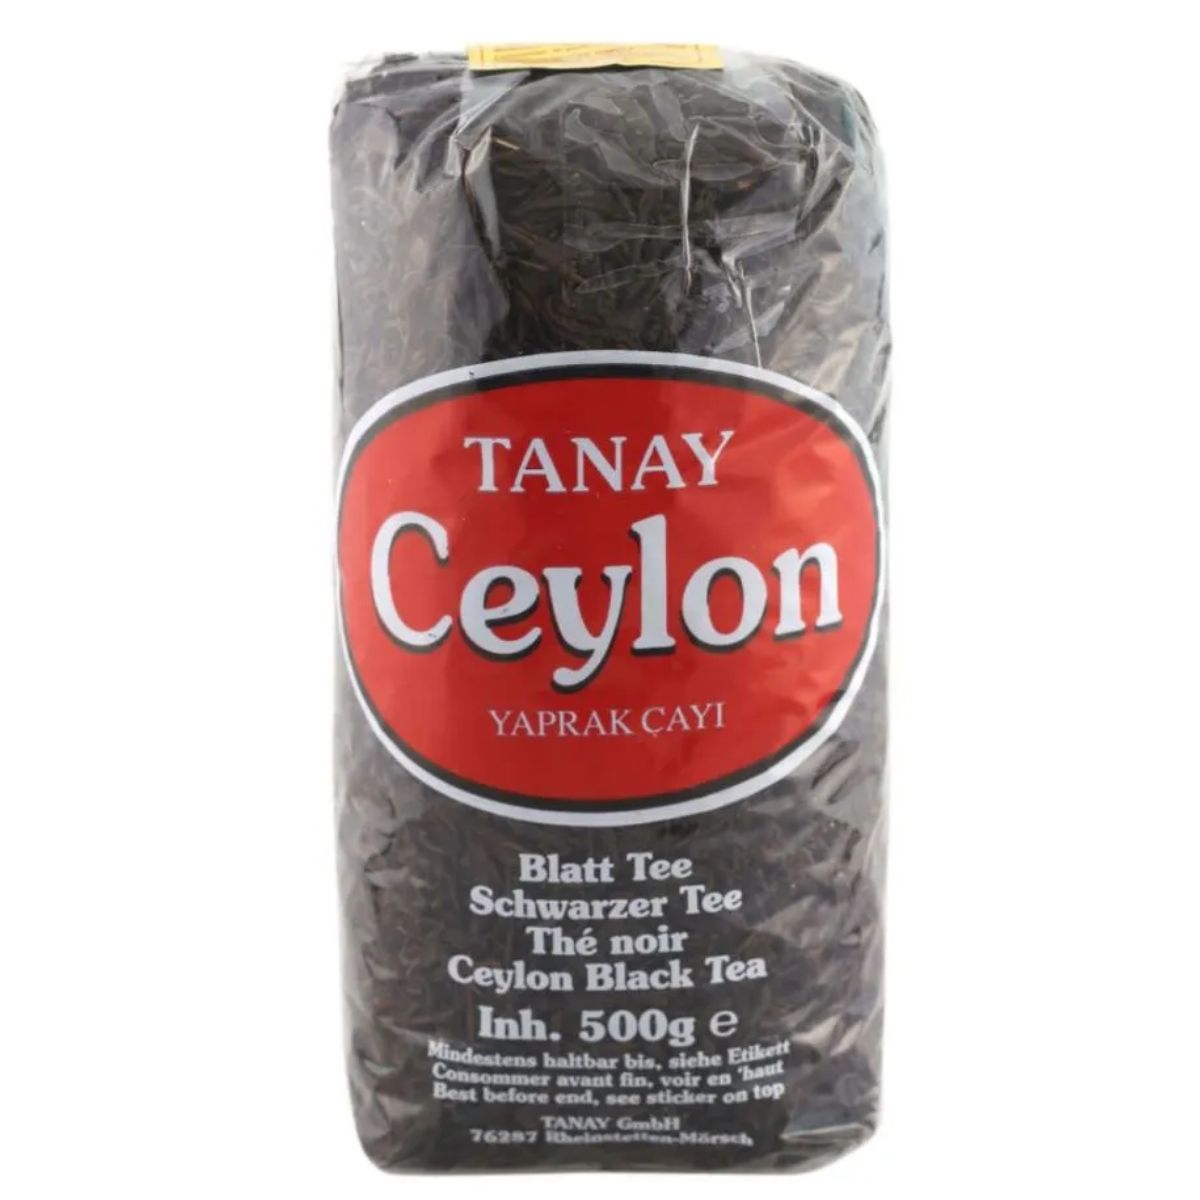 Tanay - Cha Preto Ceylon - 500g black tea.